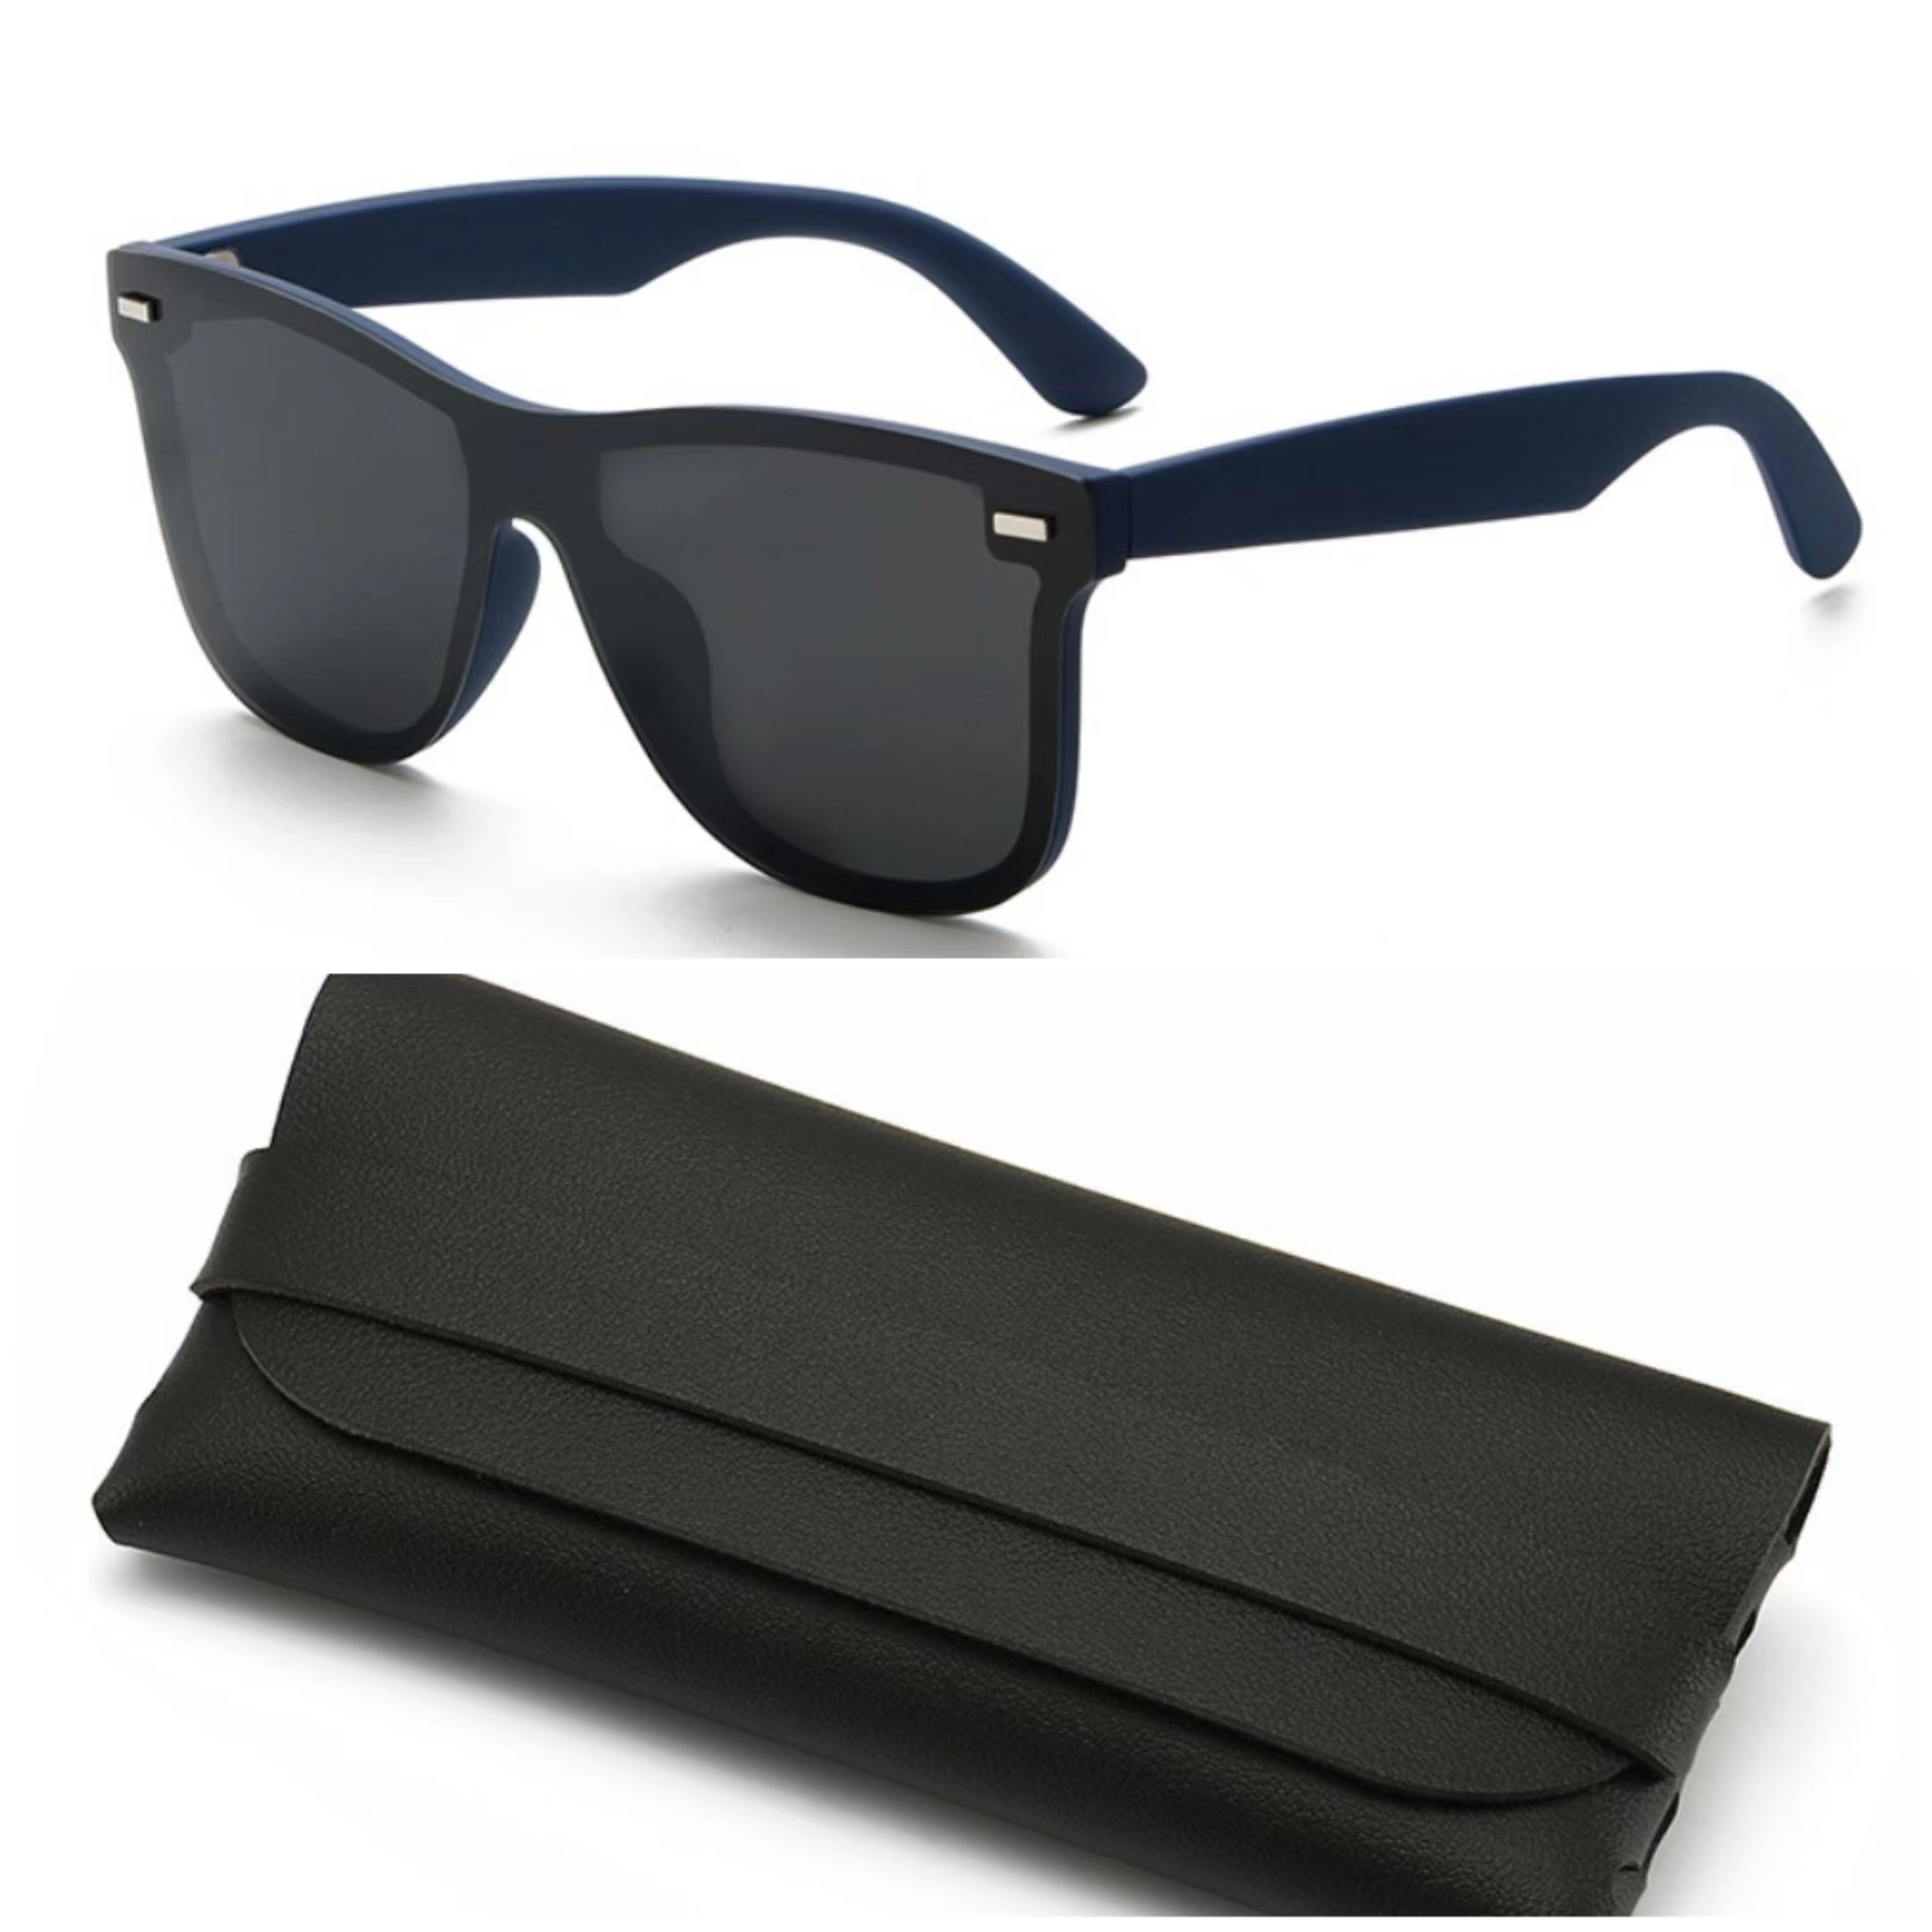 Gafas De Sol Polarizadas Para Hombre Con Protección Uv, Lentes De